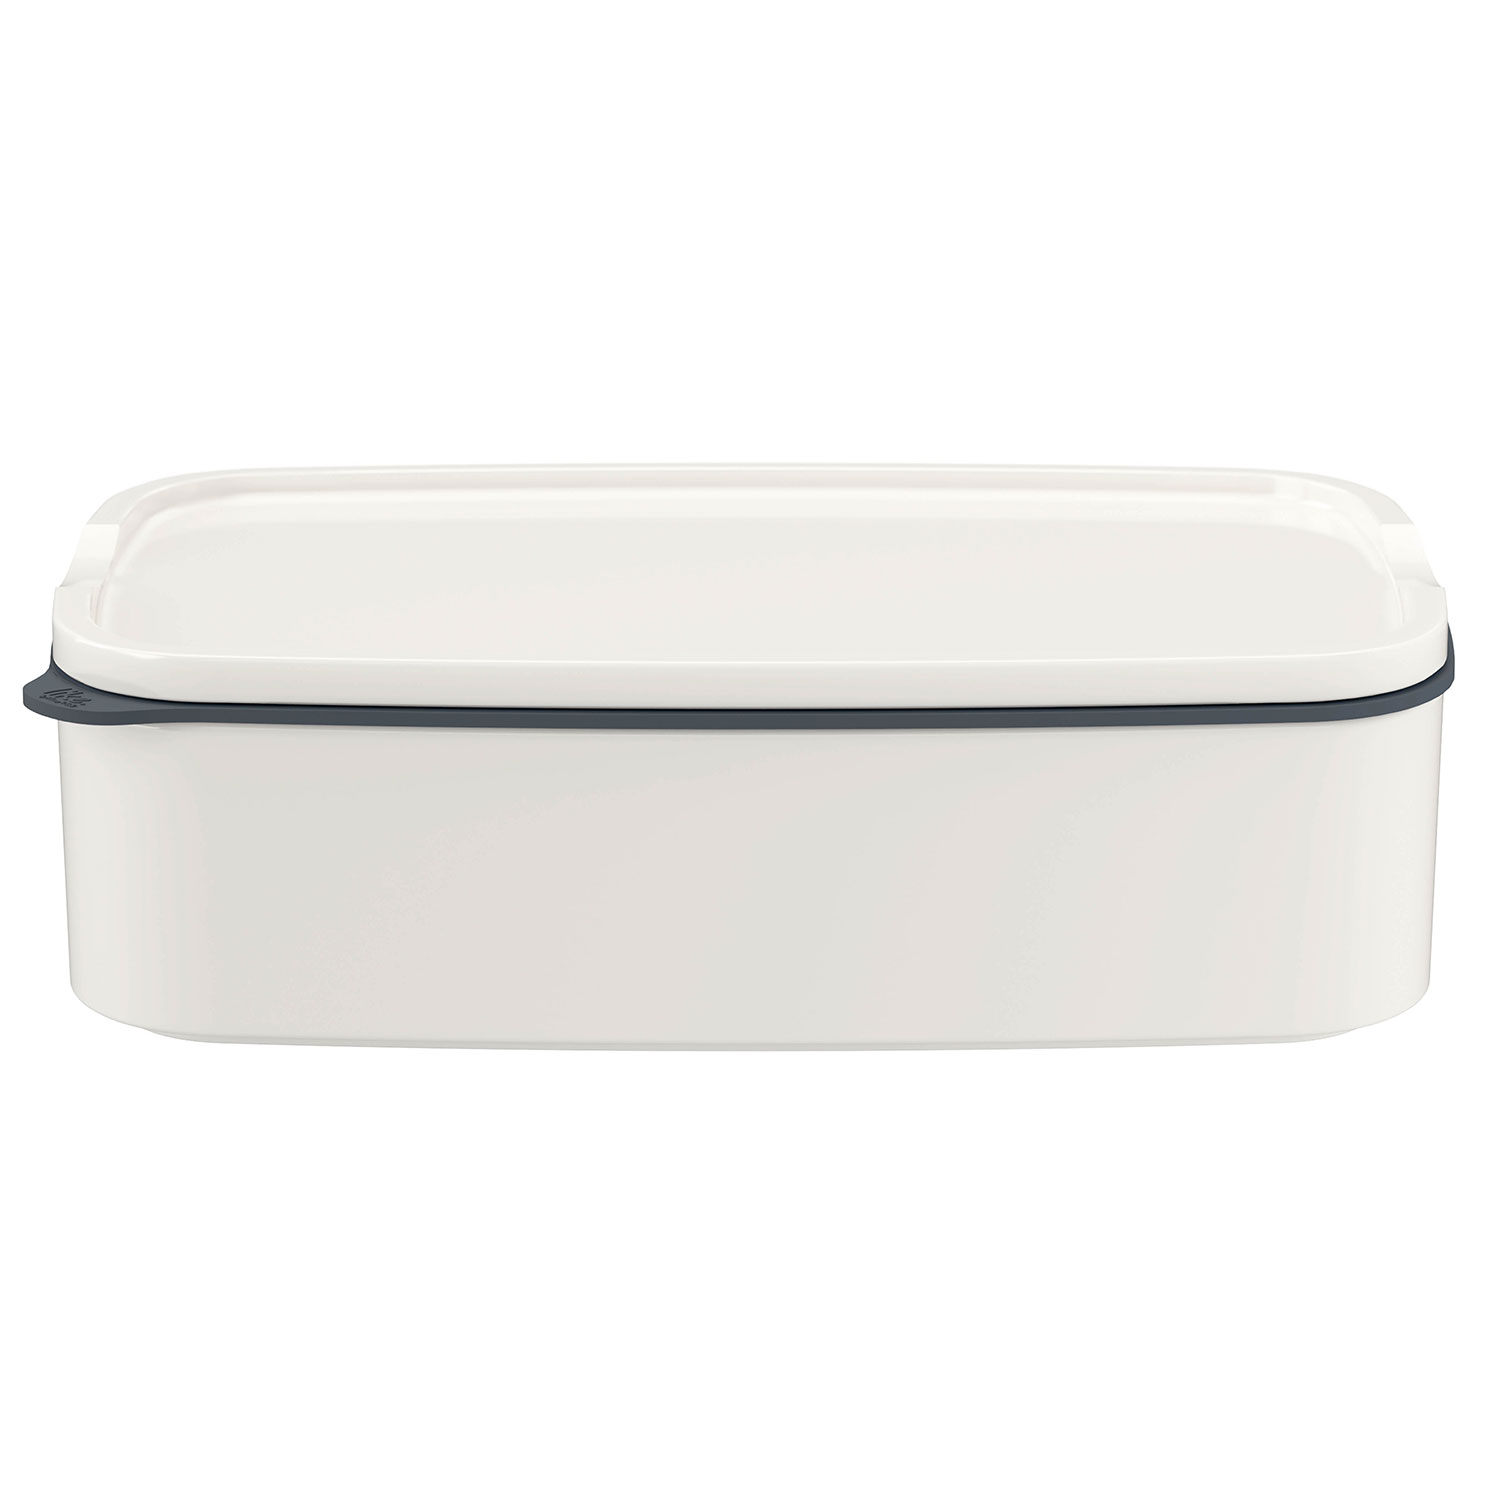 https://api-prod.royaldesign.se/api/products/image/2/villeroy-boch-togotostay-lunch-box-white-20x13x6-cm-0